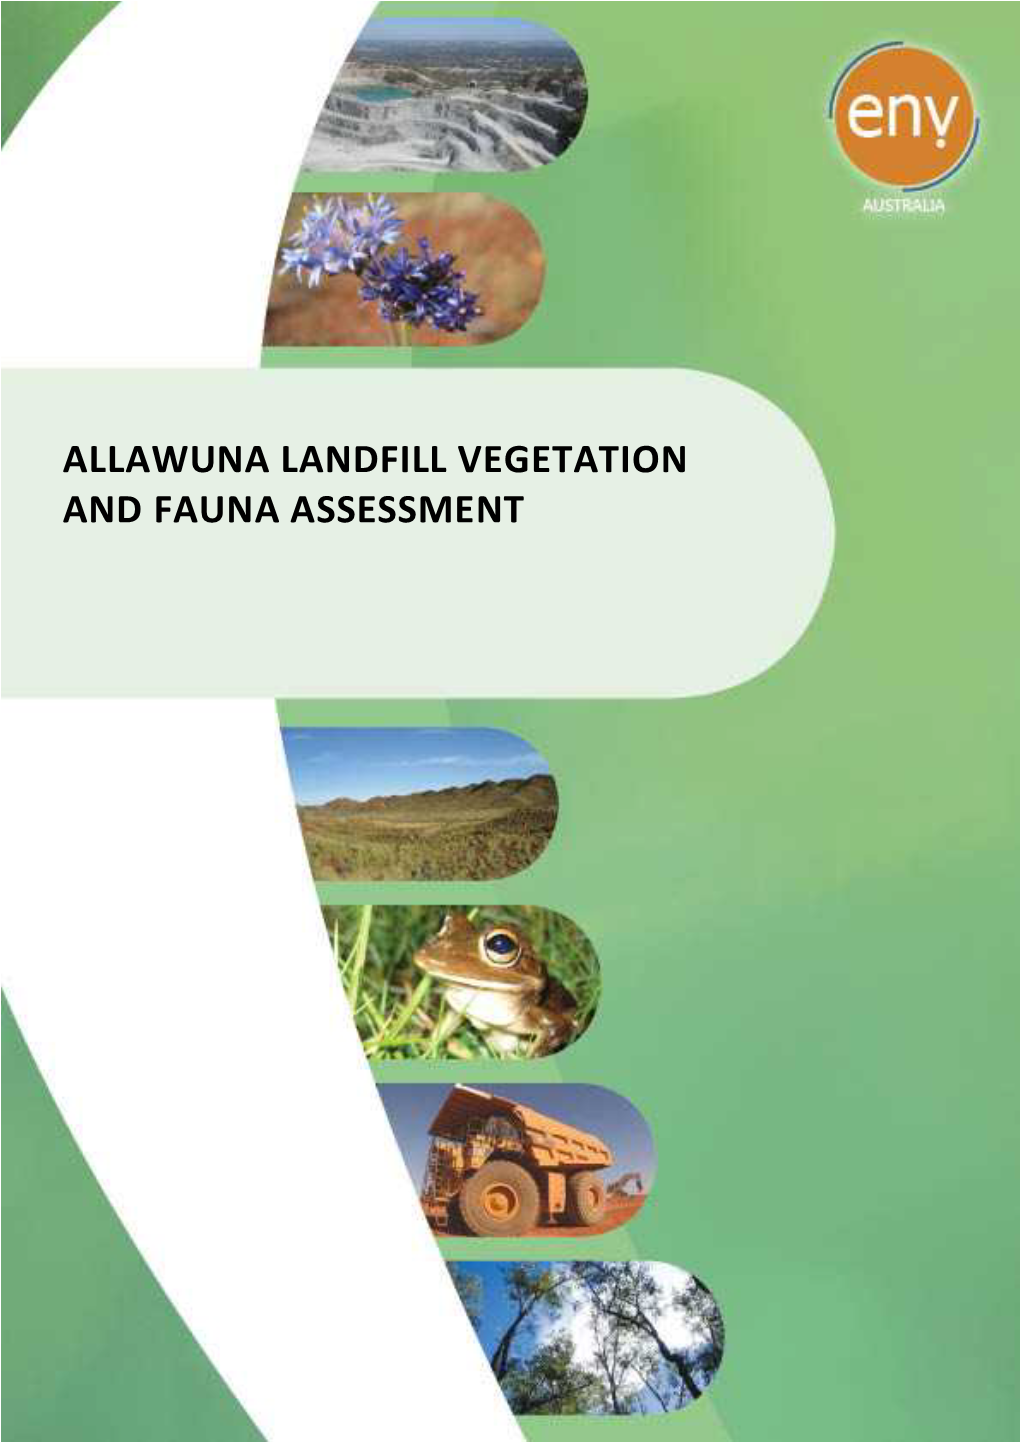 Allawuna Landfill Vegetation and Fauna Assessment